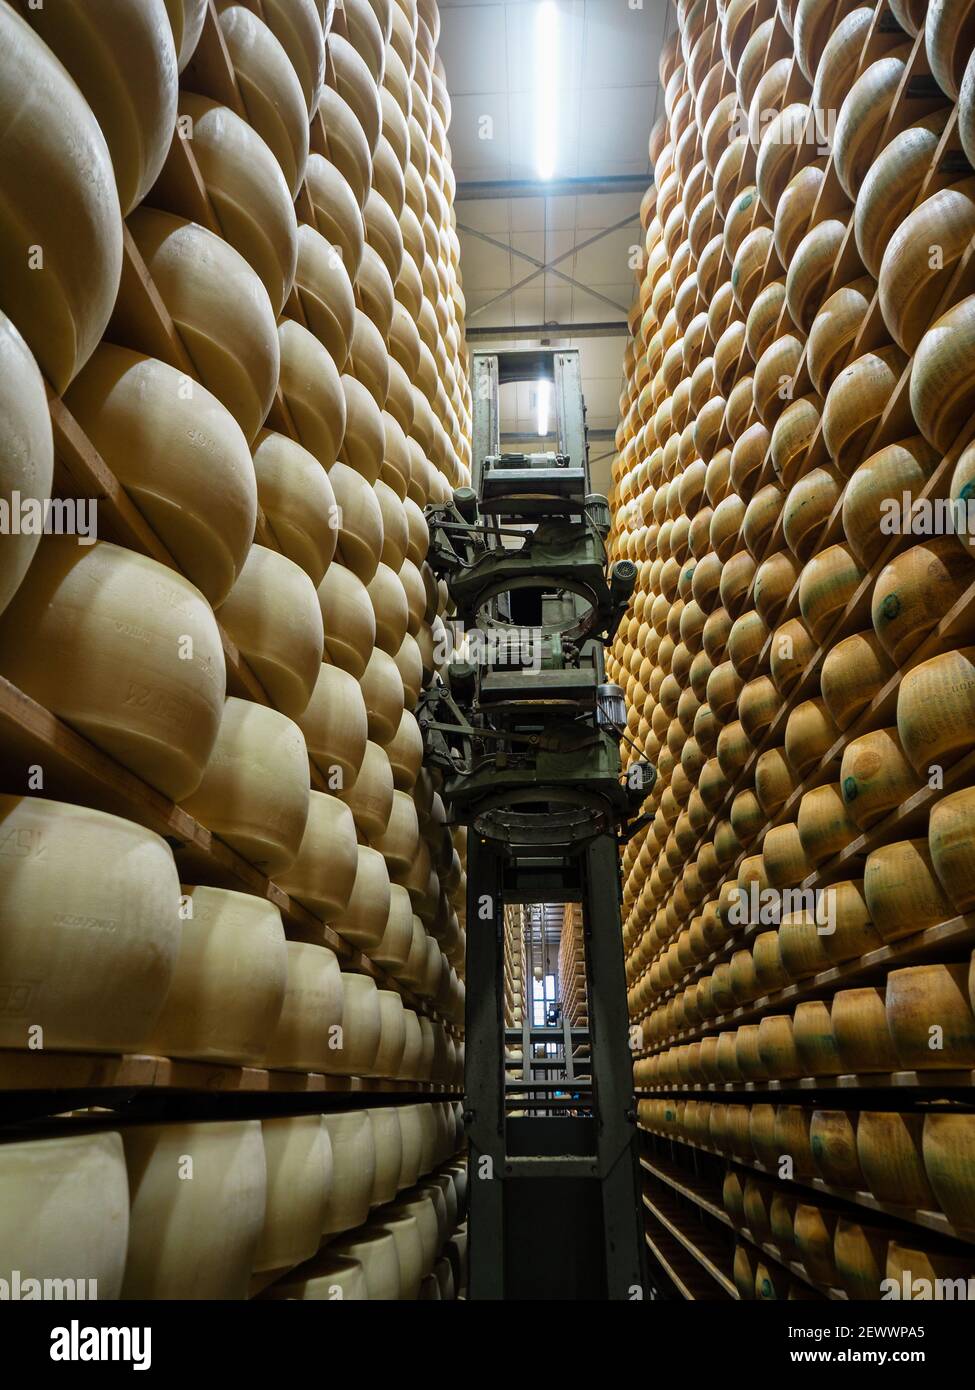 https://c8.alamy.com/comp/2EWWPA5/parmesan-cheese-storage-in-dairy-farm-in-parma-italy-2020-2EWWPA5.jpg